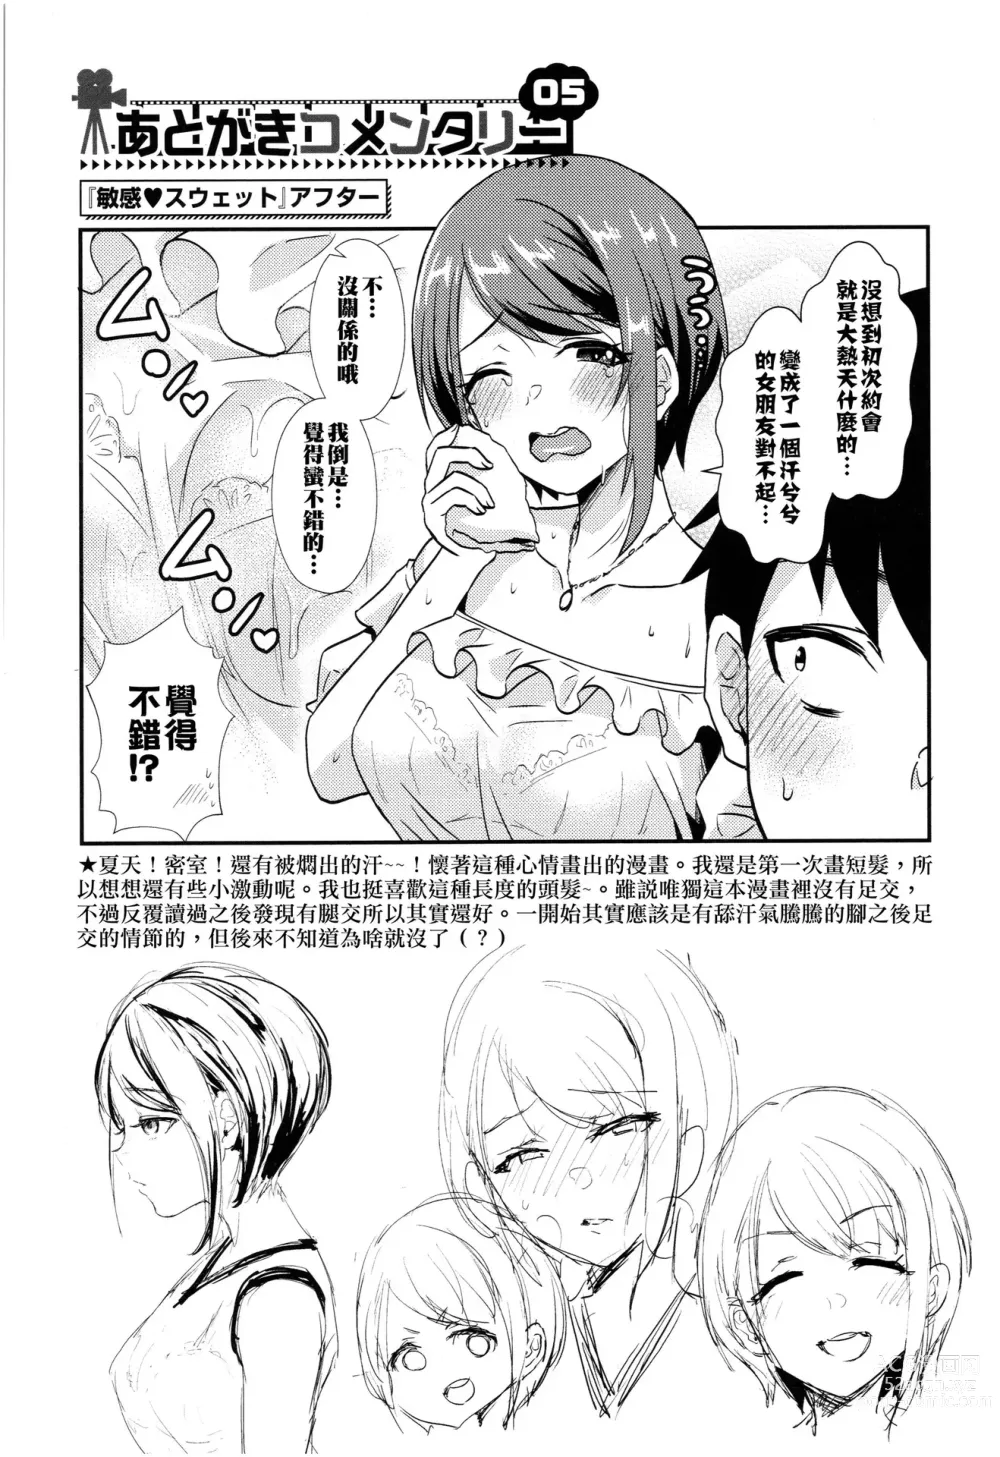 Page 190 of manga Otome Initiative - Girls Initiative (uncensored)